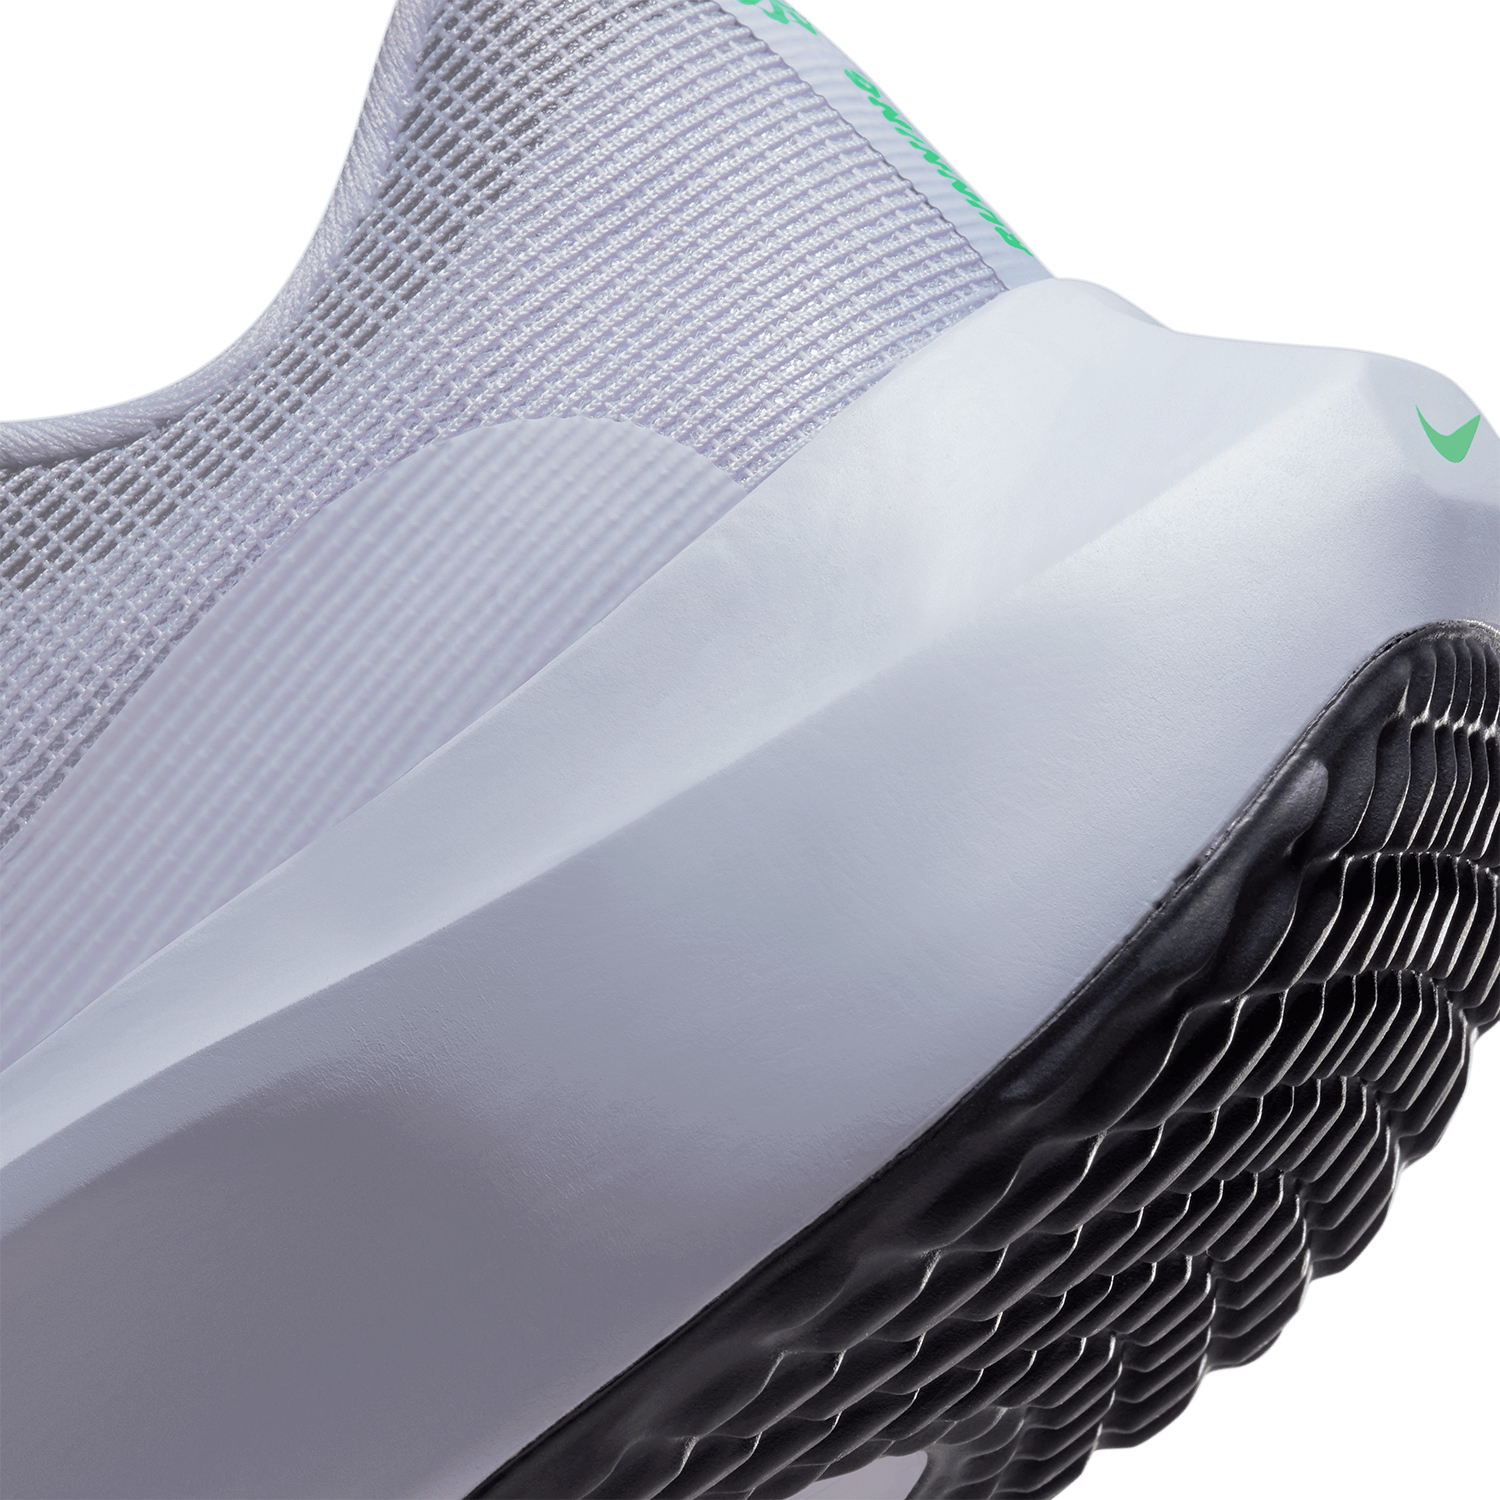 Nike Zoom Fly 5 Men's Running Shoes - Oxygen Purple/Gridiron